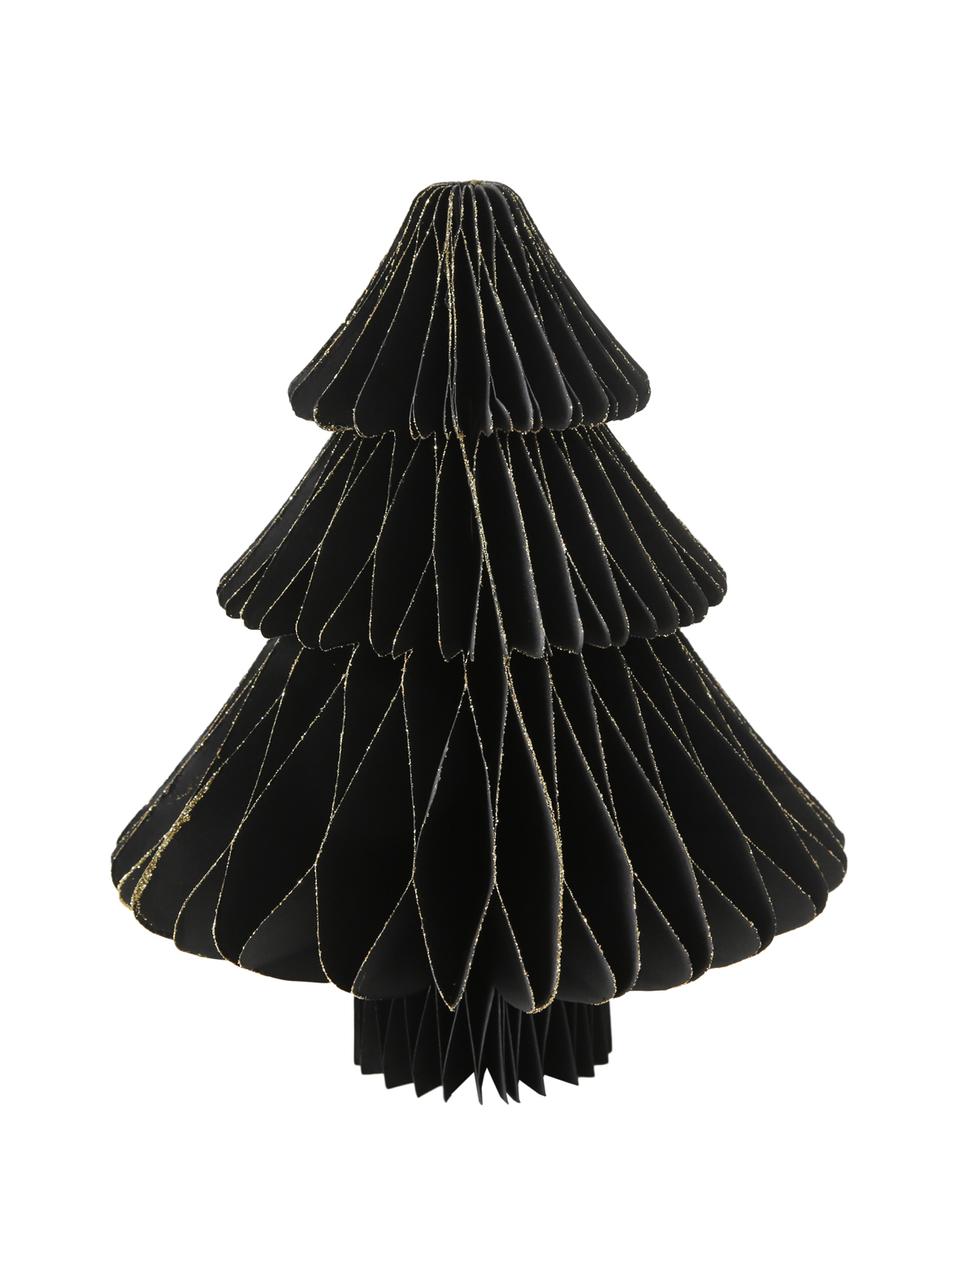 Pieza decorativa pino Sander, Papel, Negro, dorado, Ø 18 x Al 23 cm